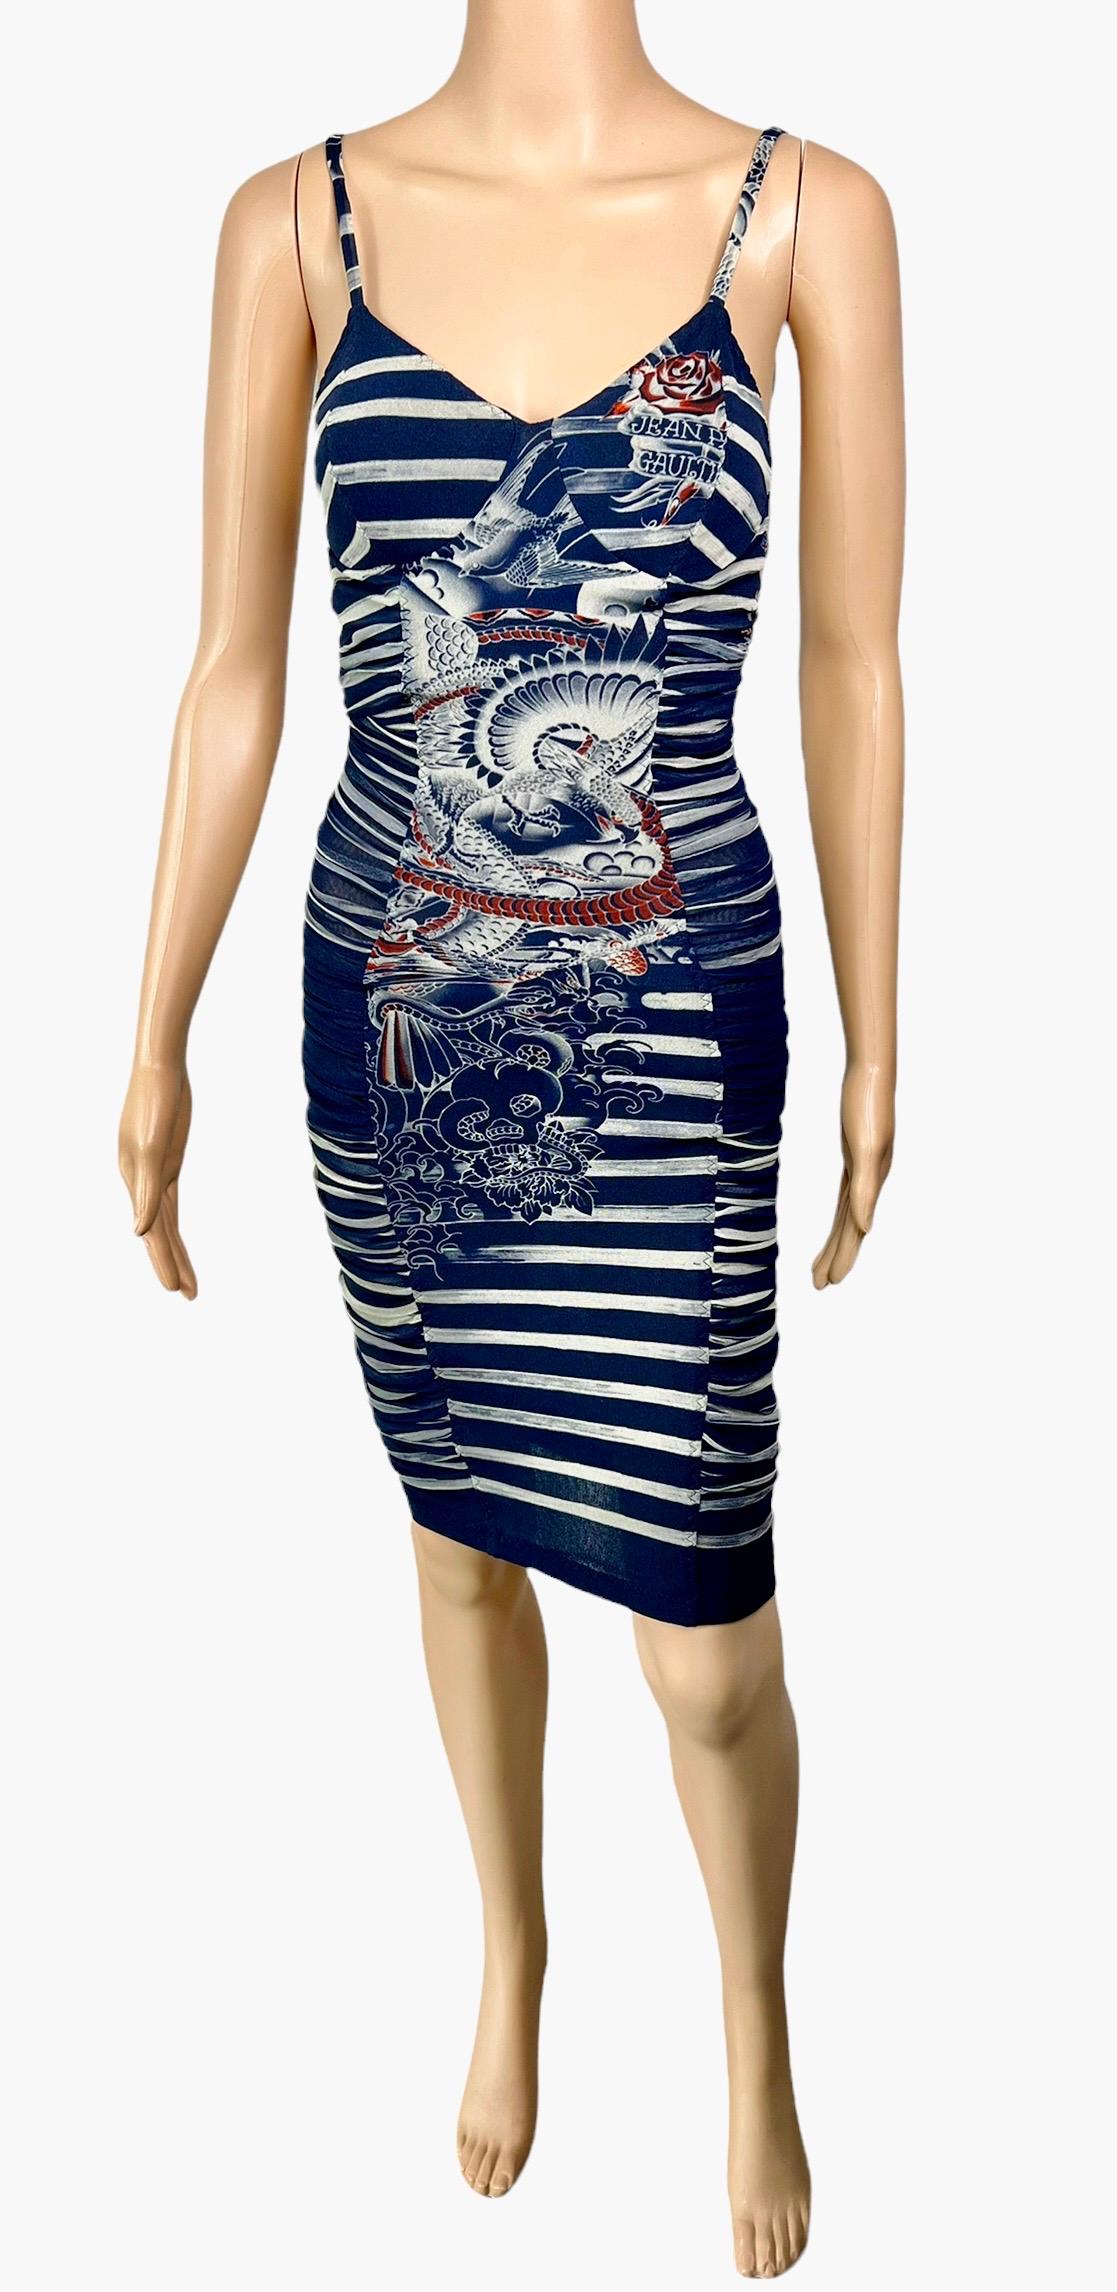 Women's or Men's Jean Paul Gaultier Soleil S/S 2012 Tattoo Print Semi-Sheer Mesh Bodycon Dress